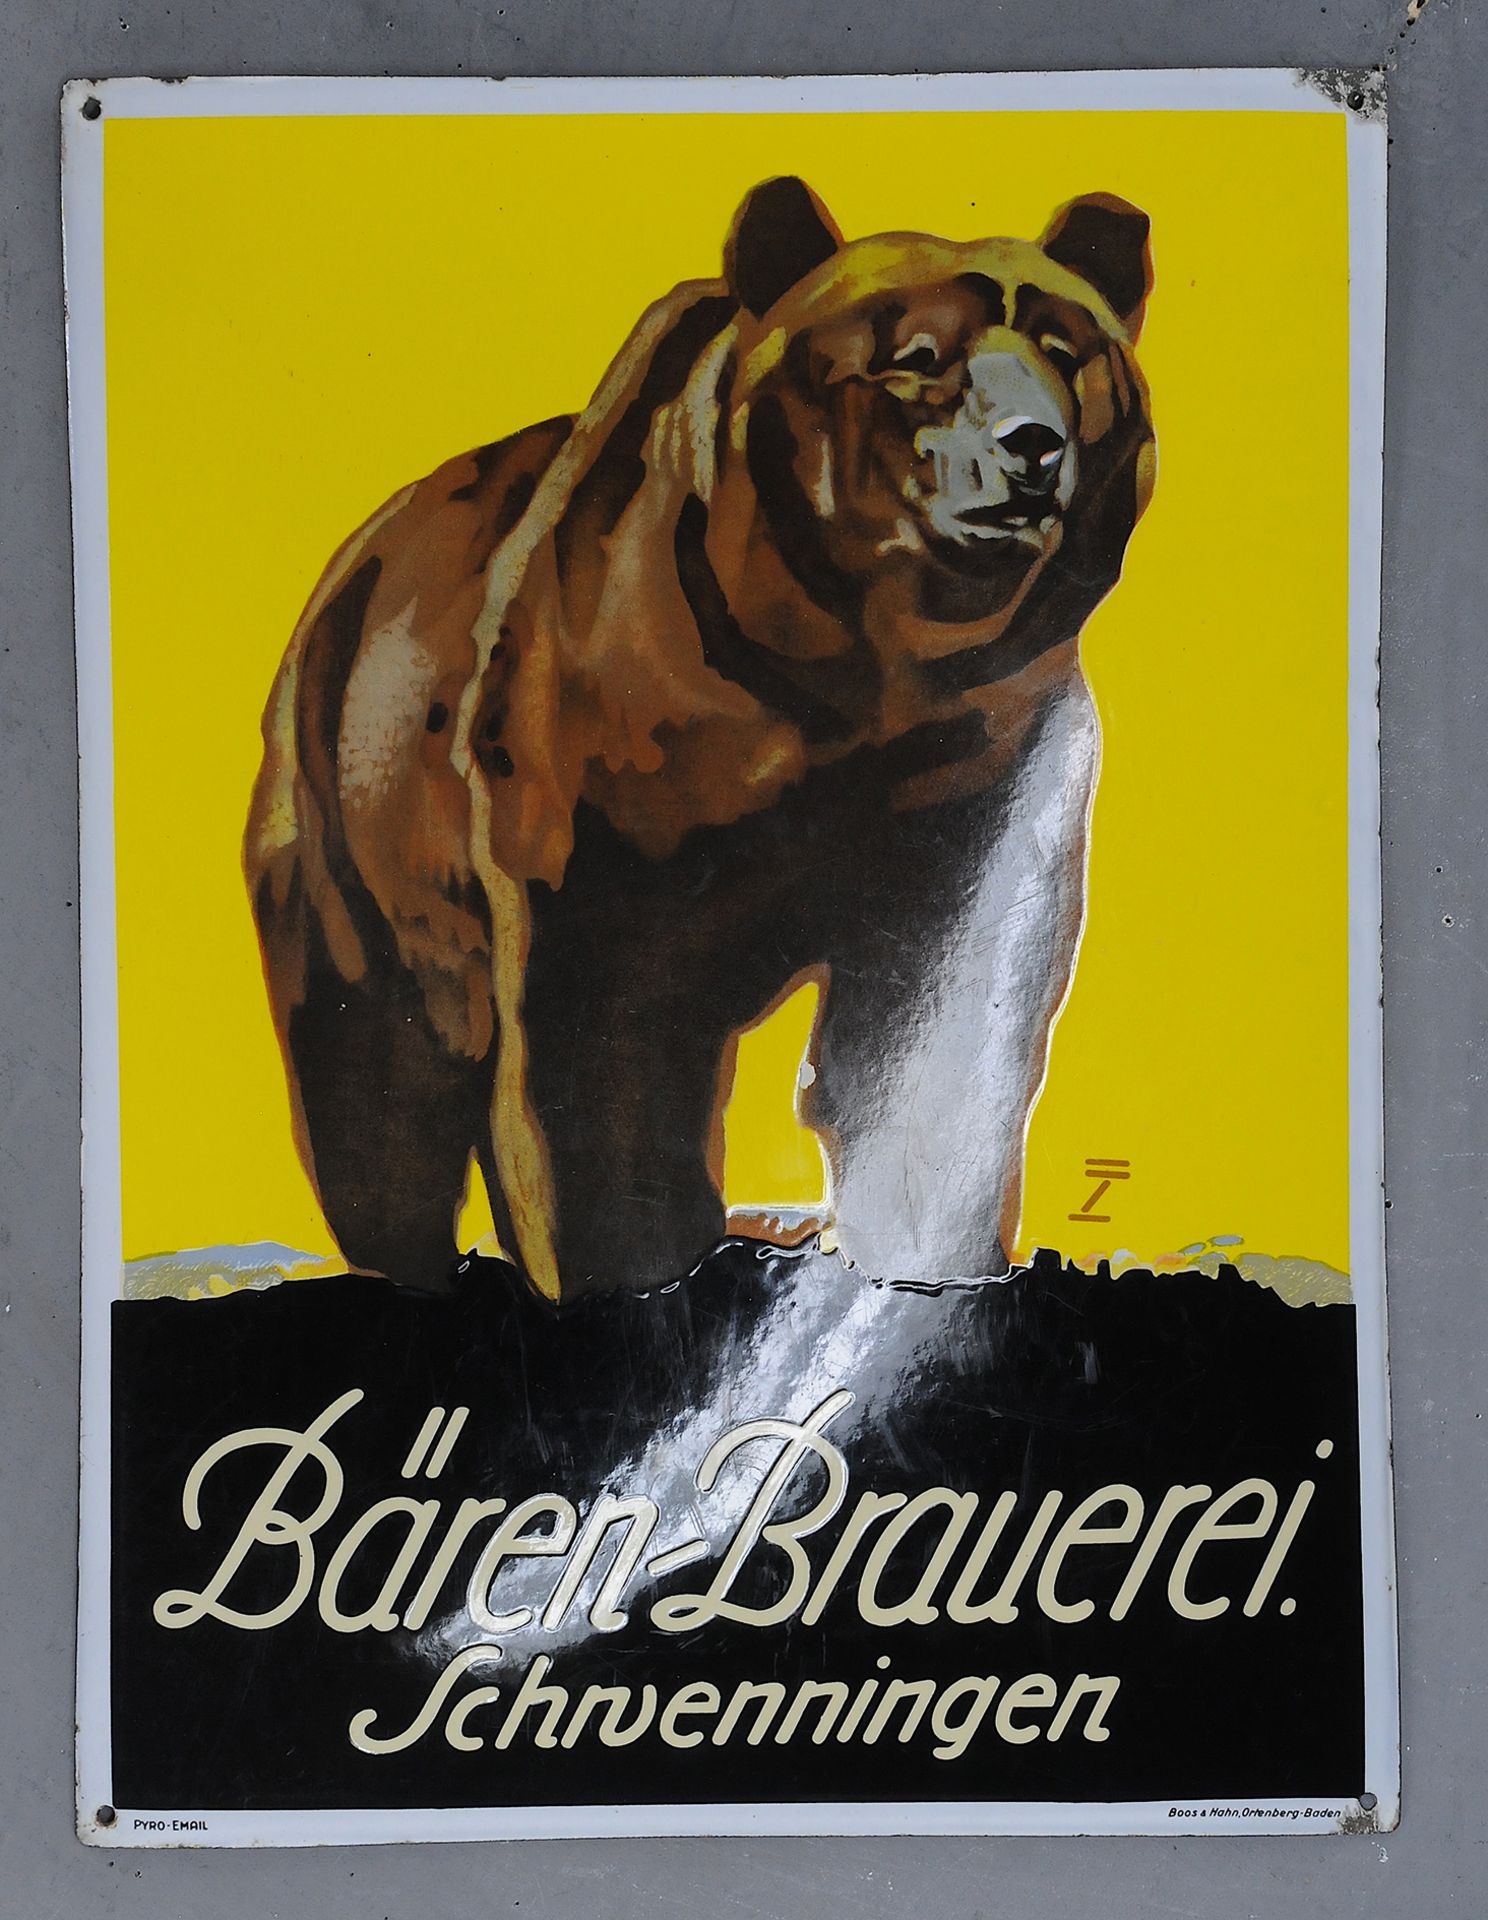 Bären-Brauerei - Image 3 of 3